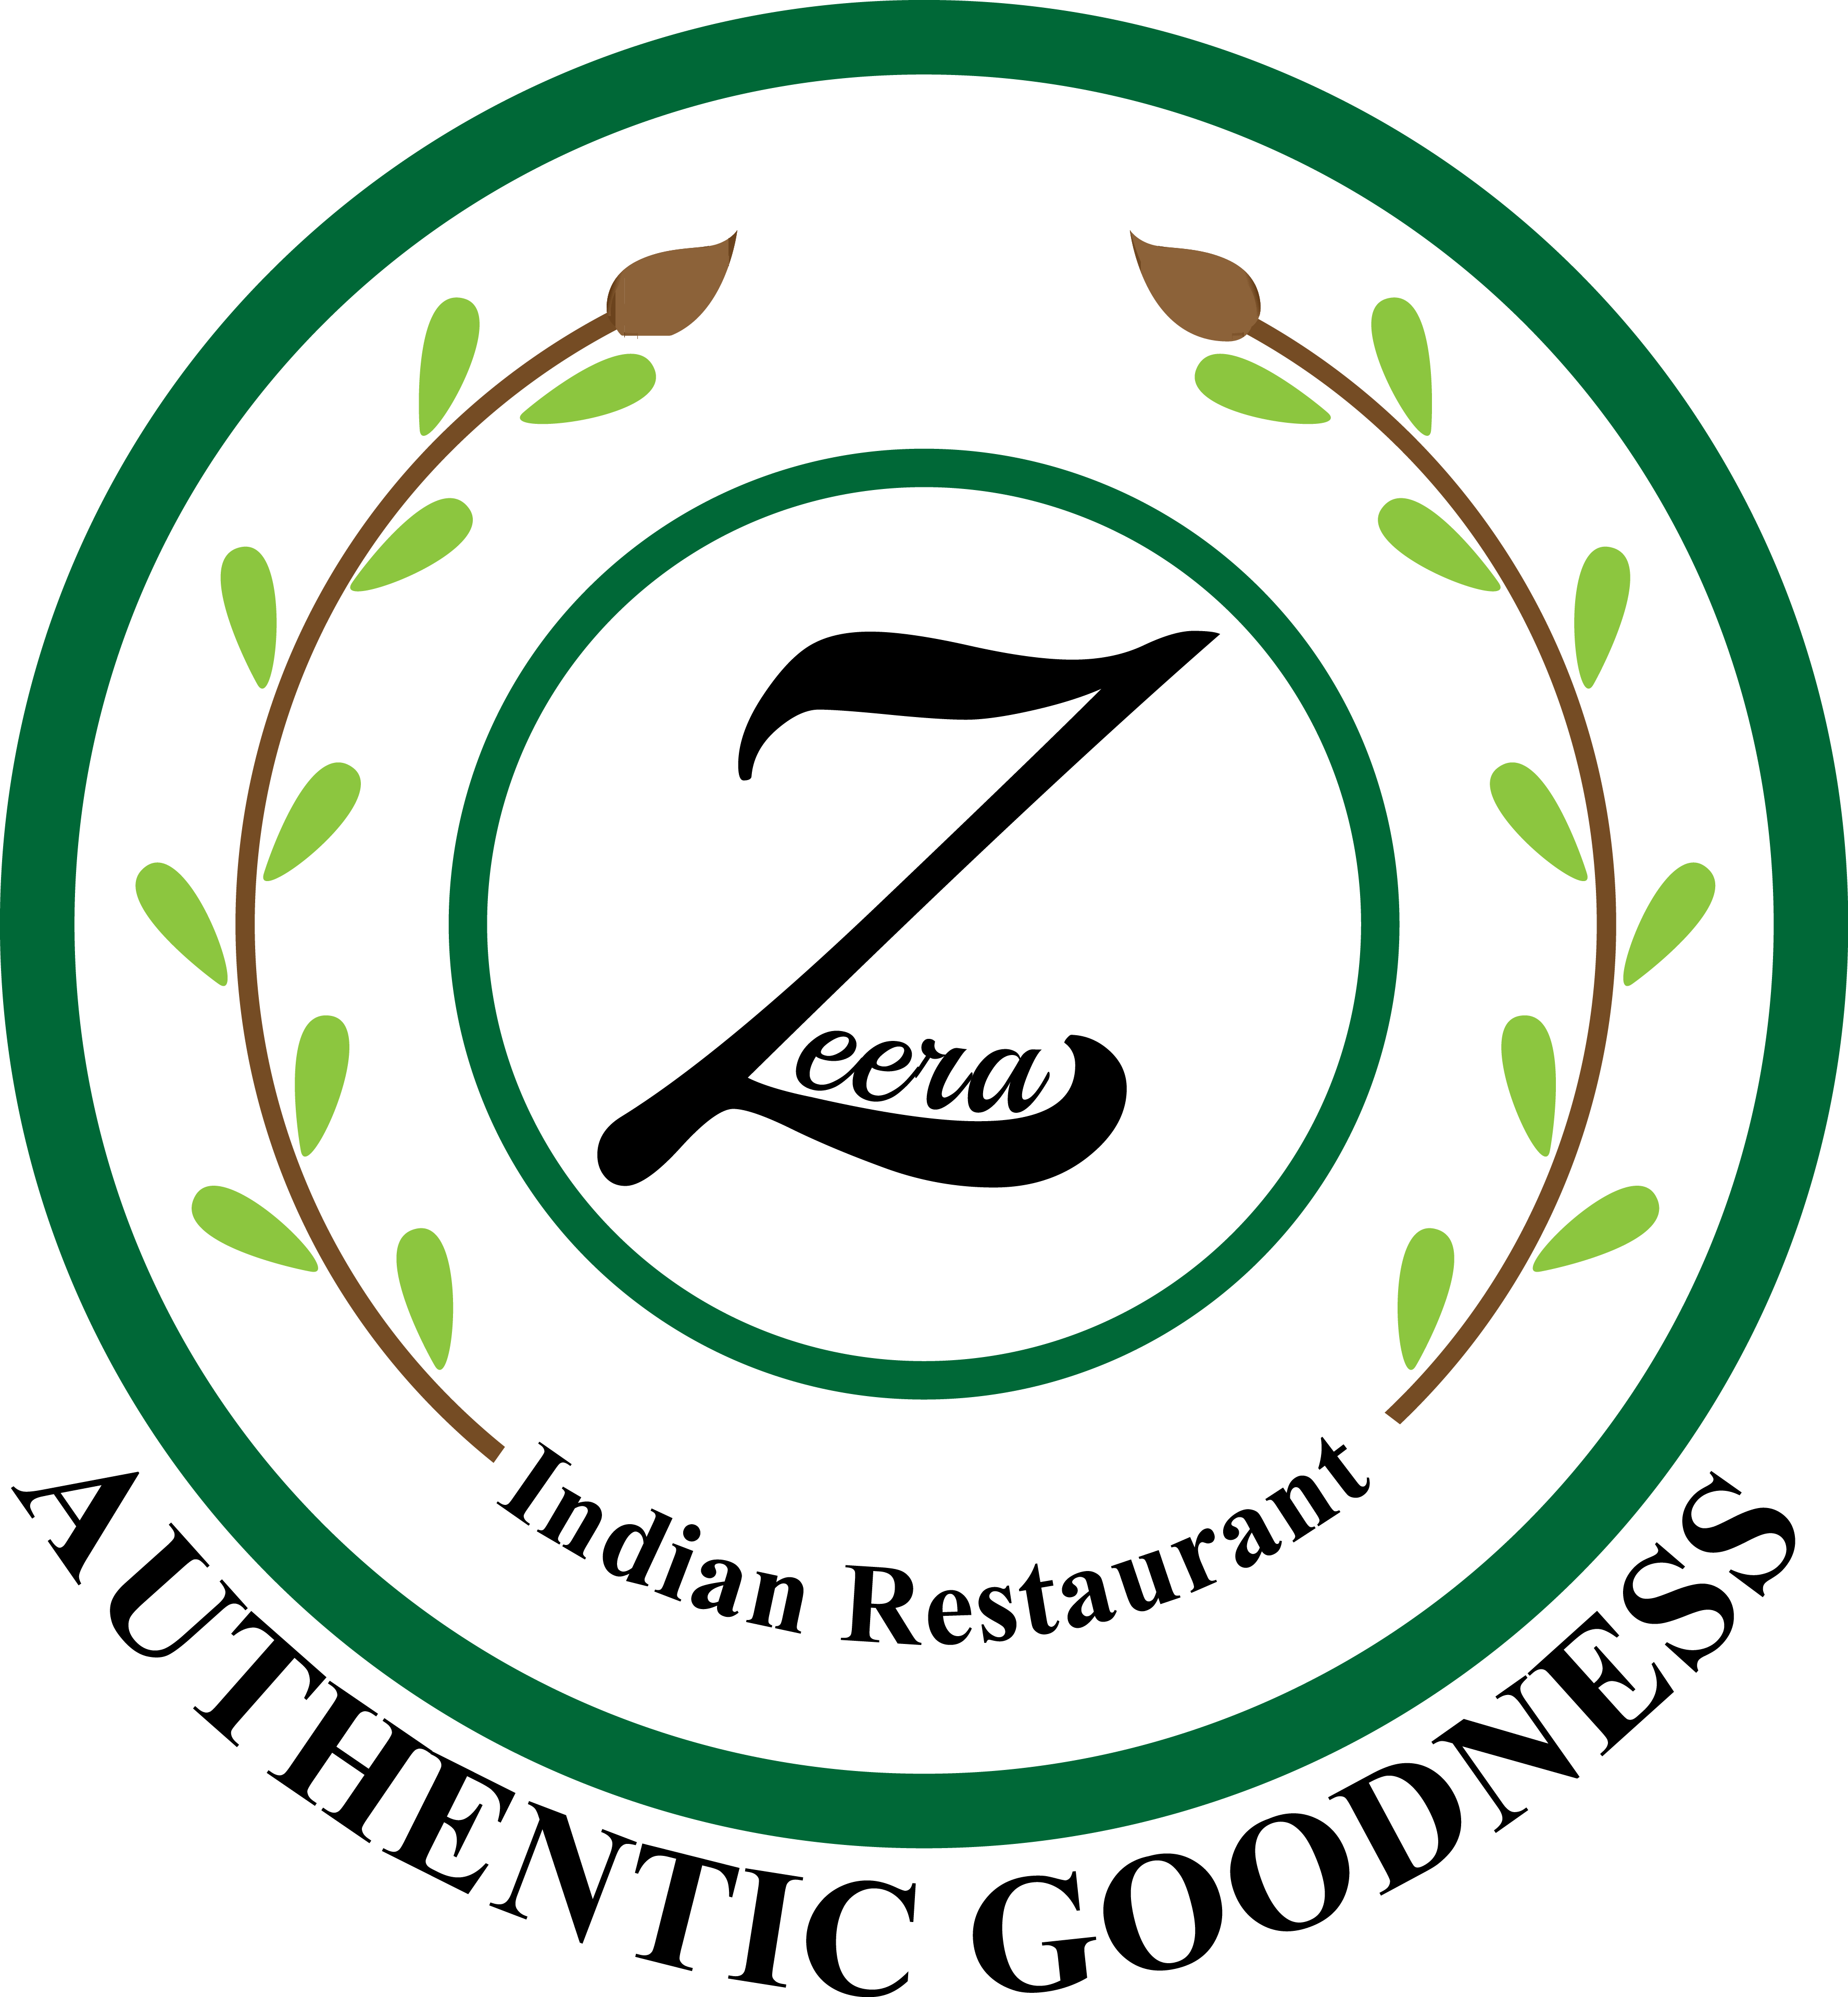 Restaurant Ha Yellow Circle Logo - Menu. Zeera Indian Restaurant